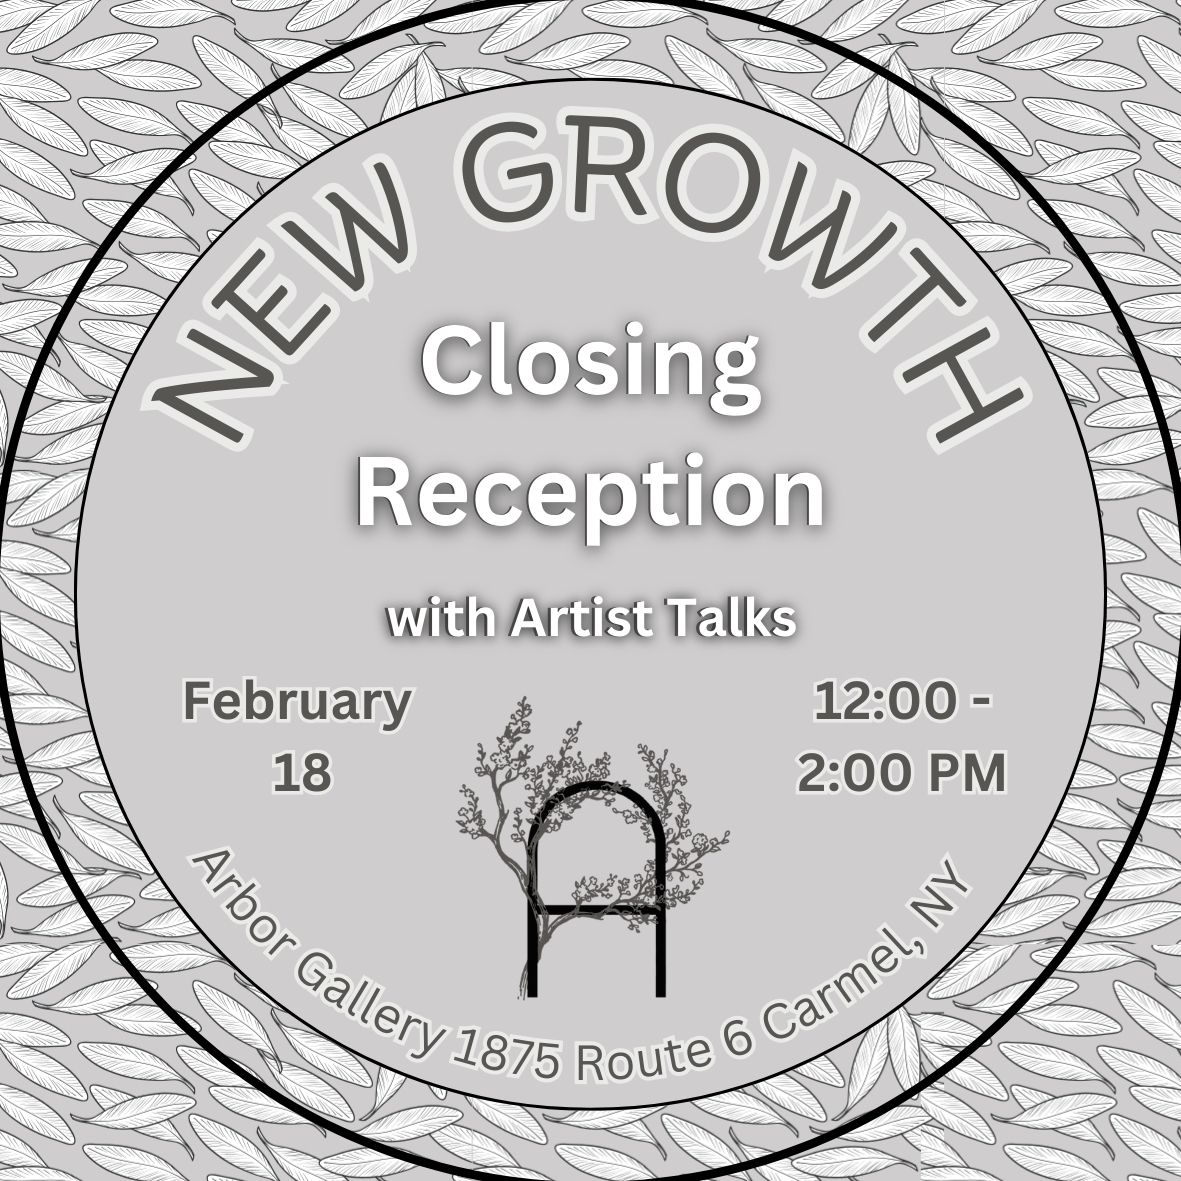 new growth closing reception february 18 12 -2